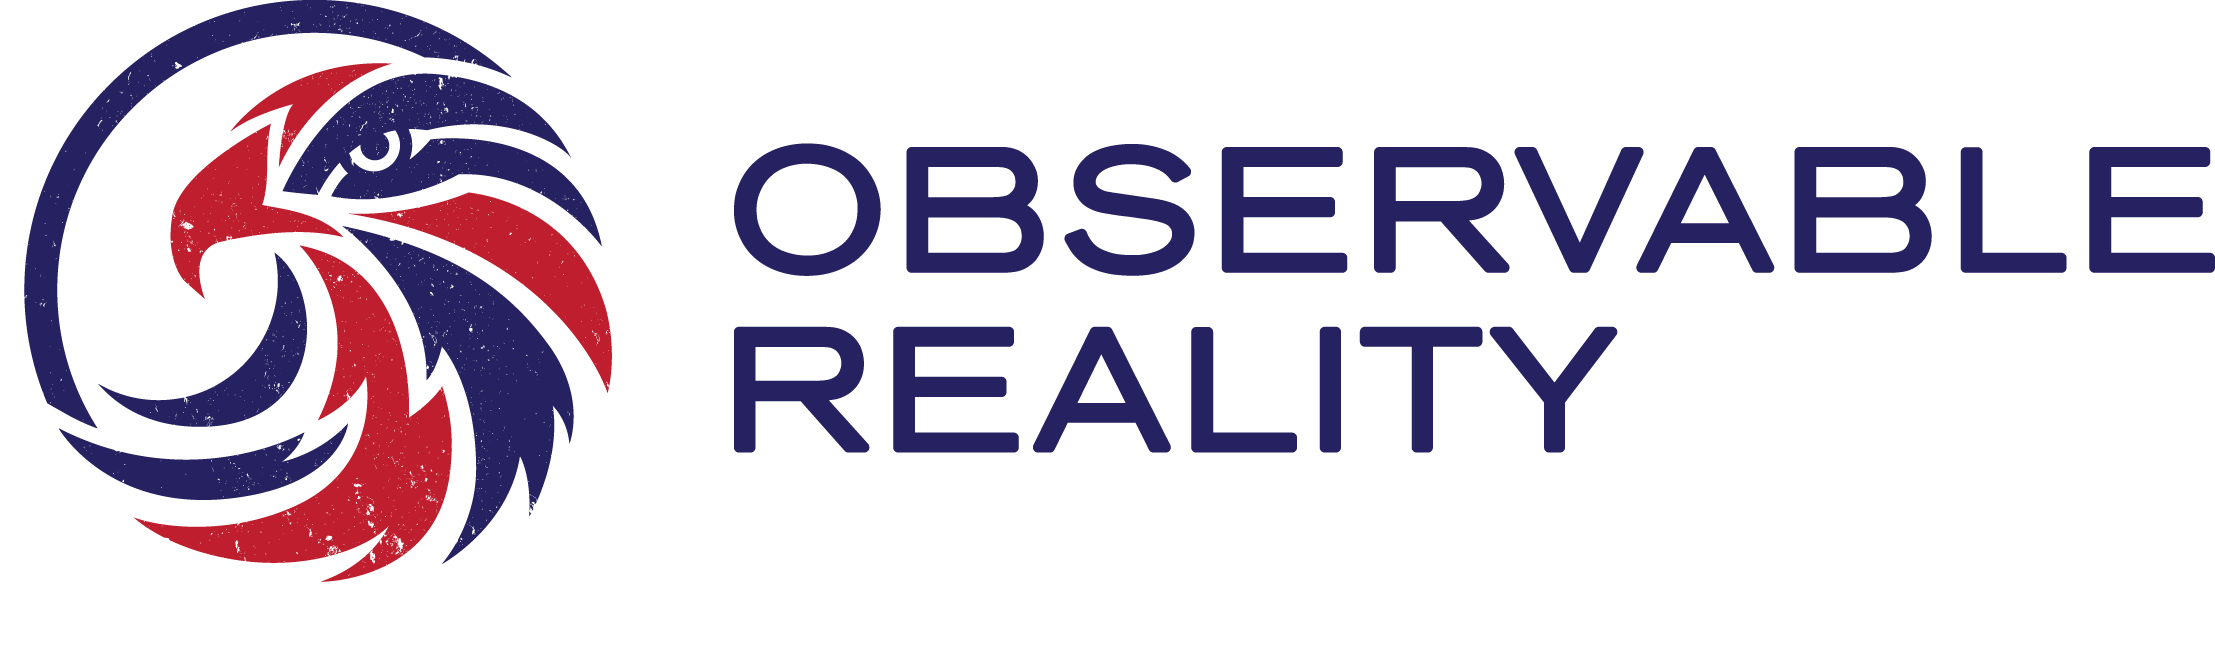 observable reality logo